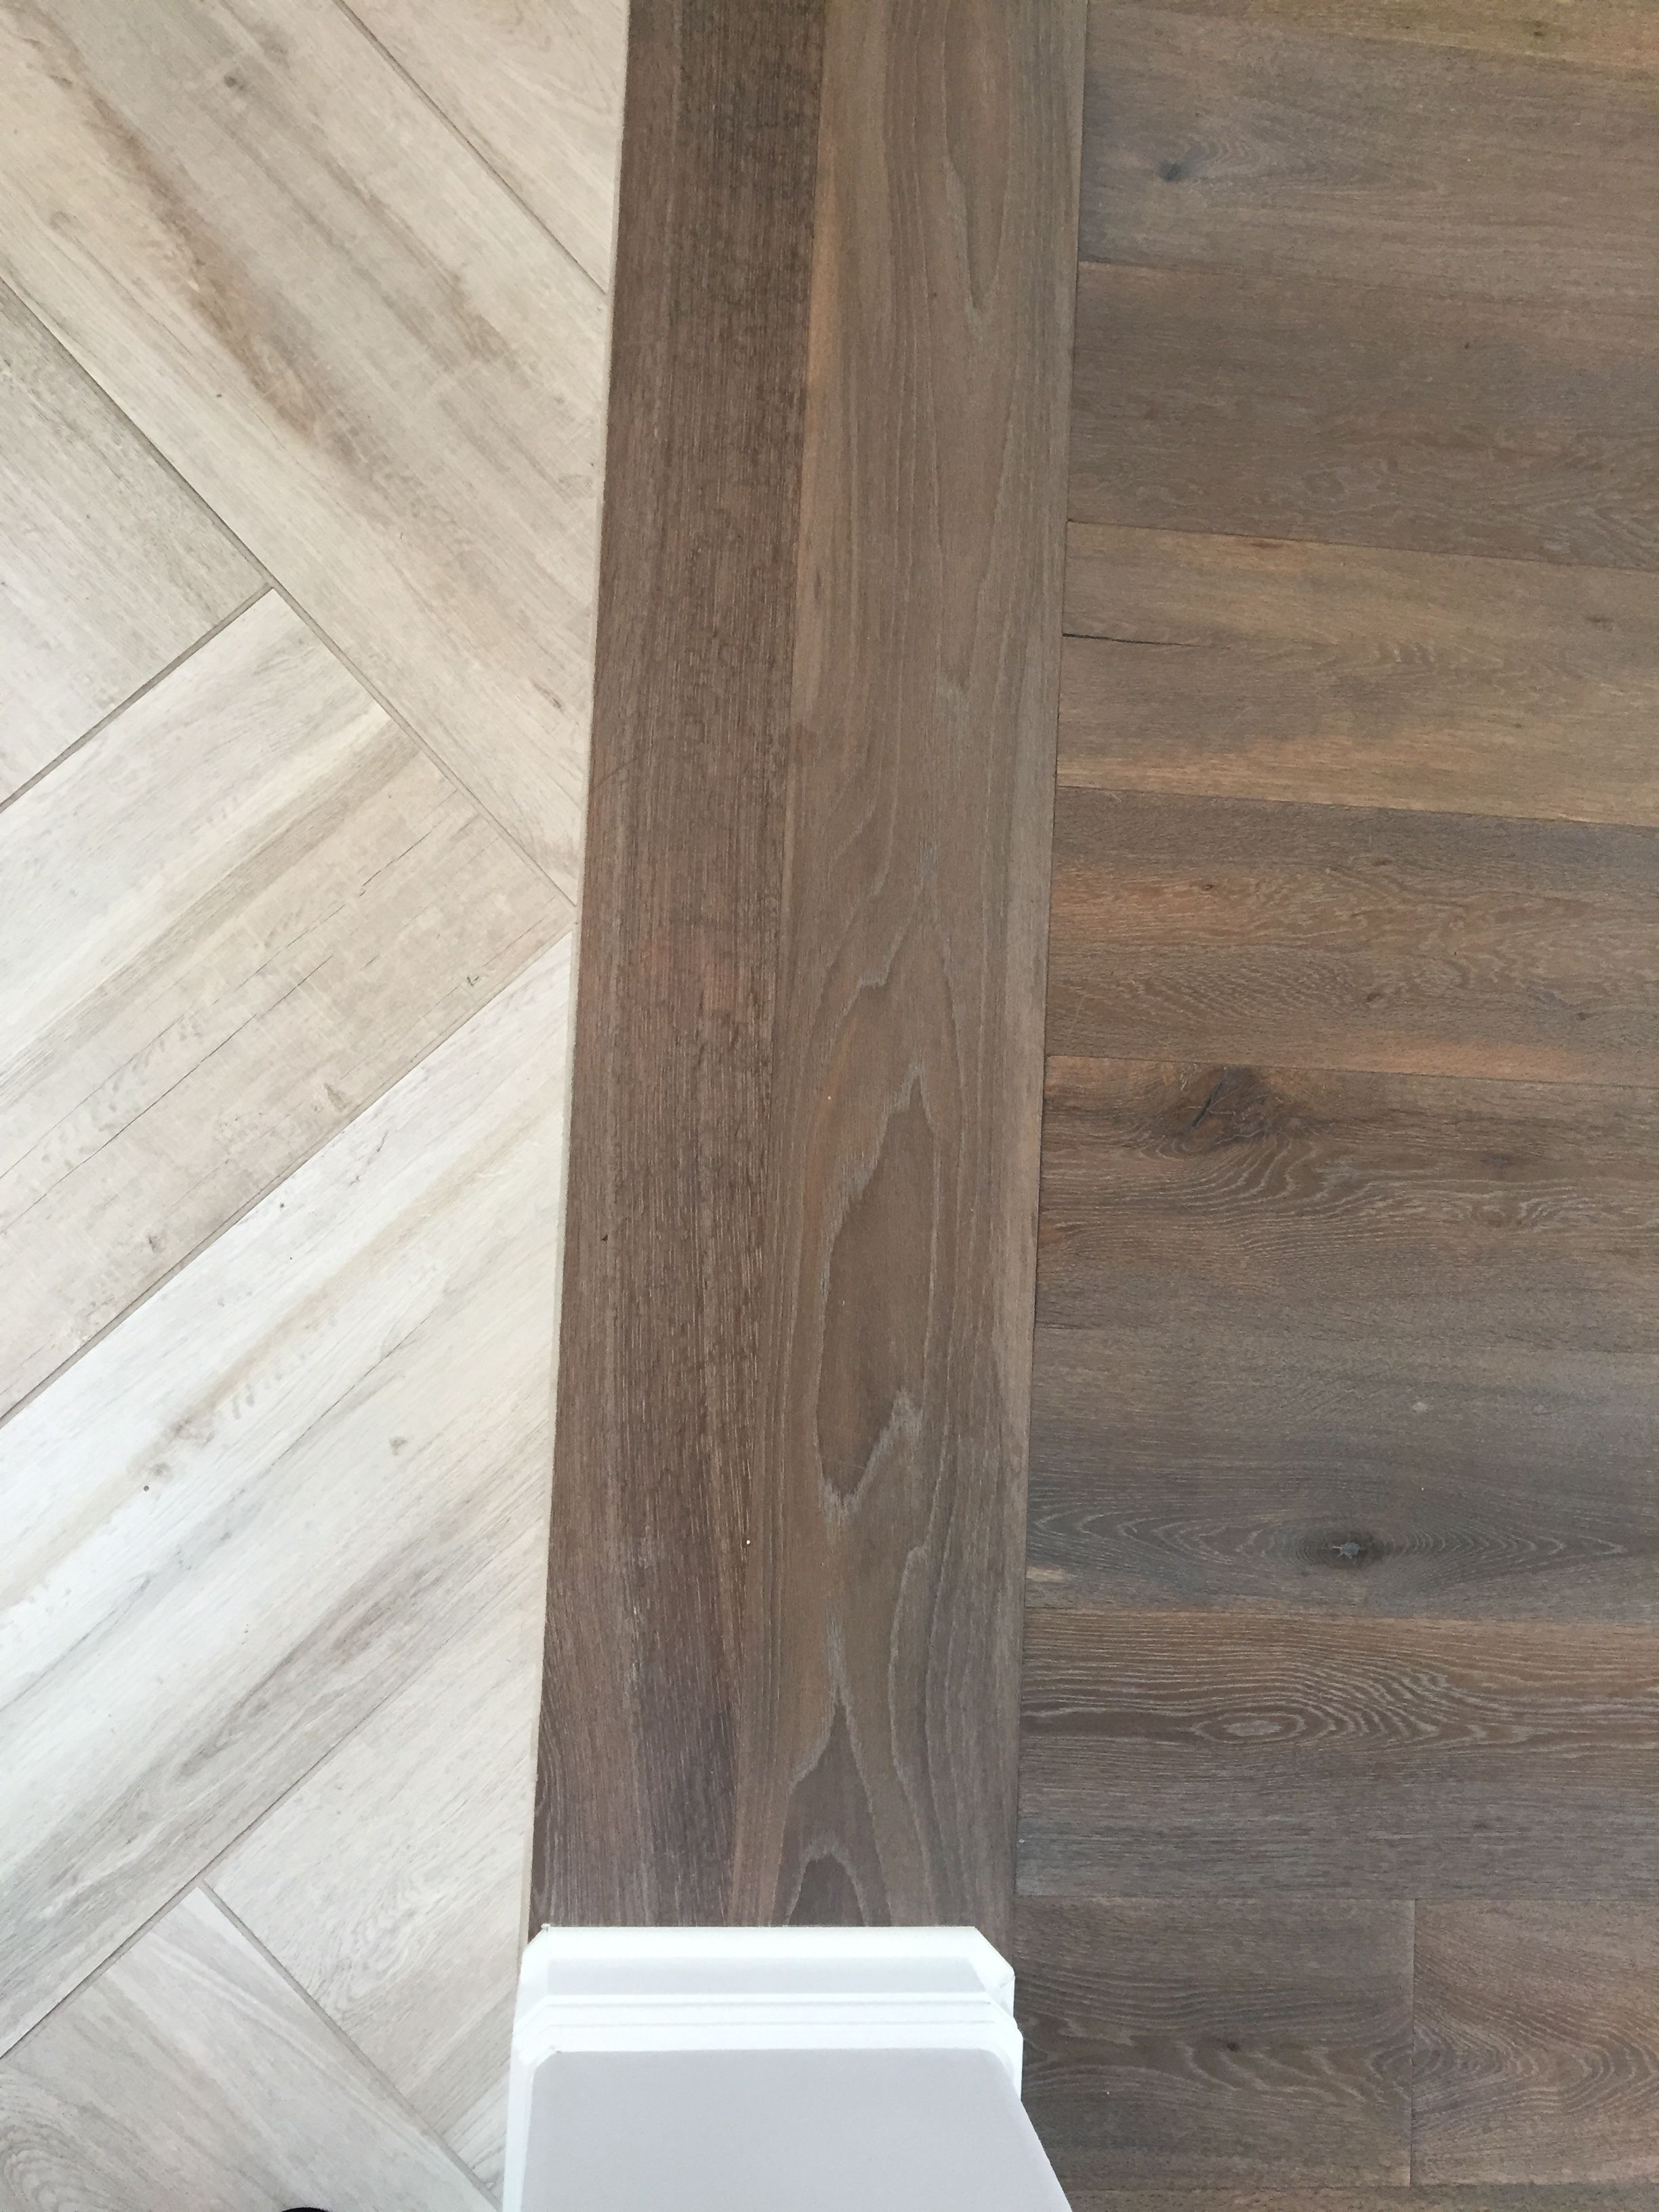 wide plank vs narrow plank hardwood flooring of floor transition laminate to herringbone tile pattern model throughout floor transition laminate to herringbone tile pattern herringbone tile pattern herringbone wood floor